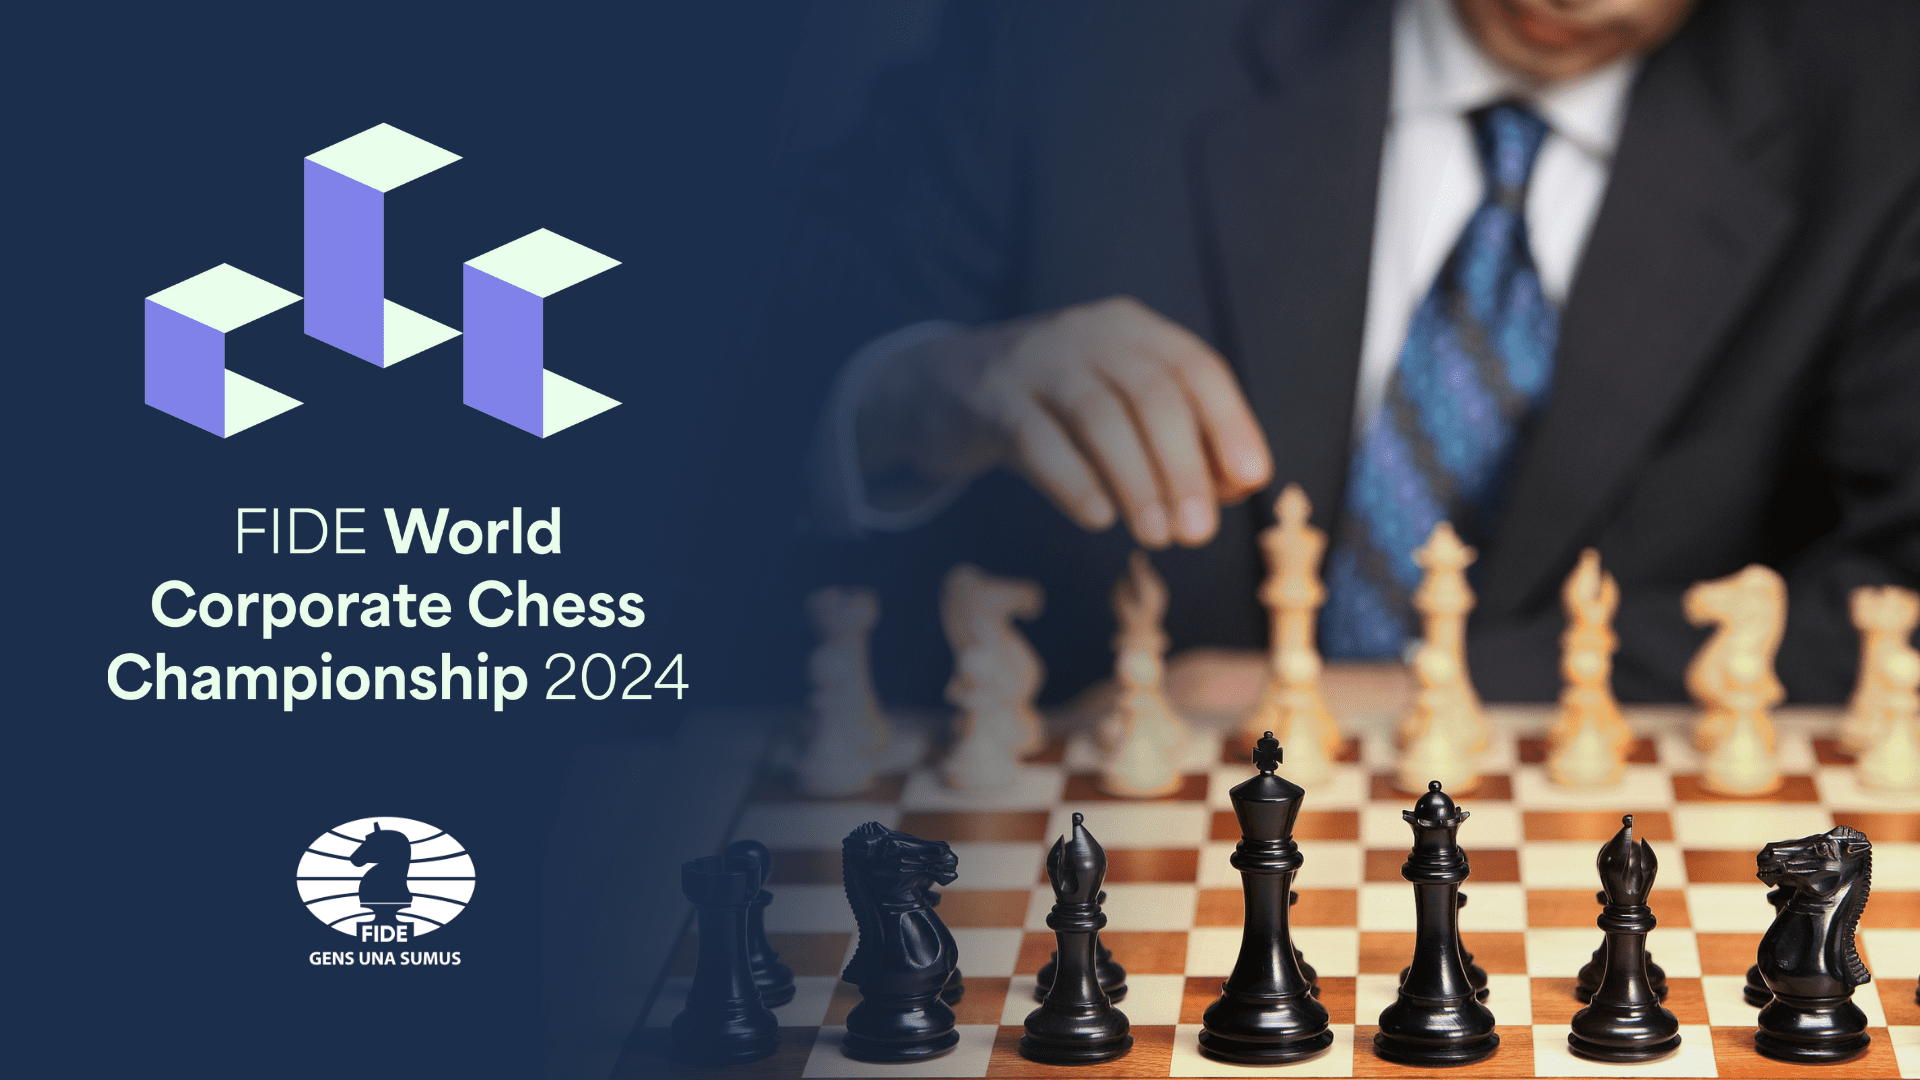 FIDE World Corporate Chess Championship 2024